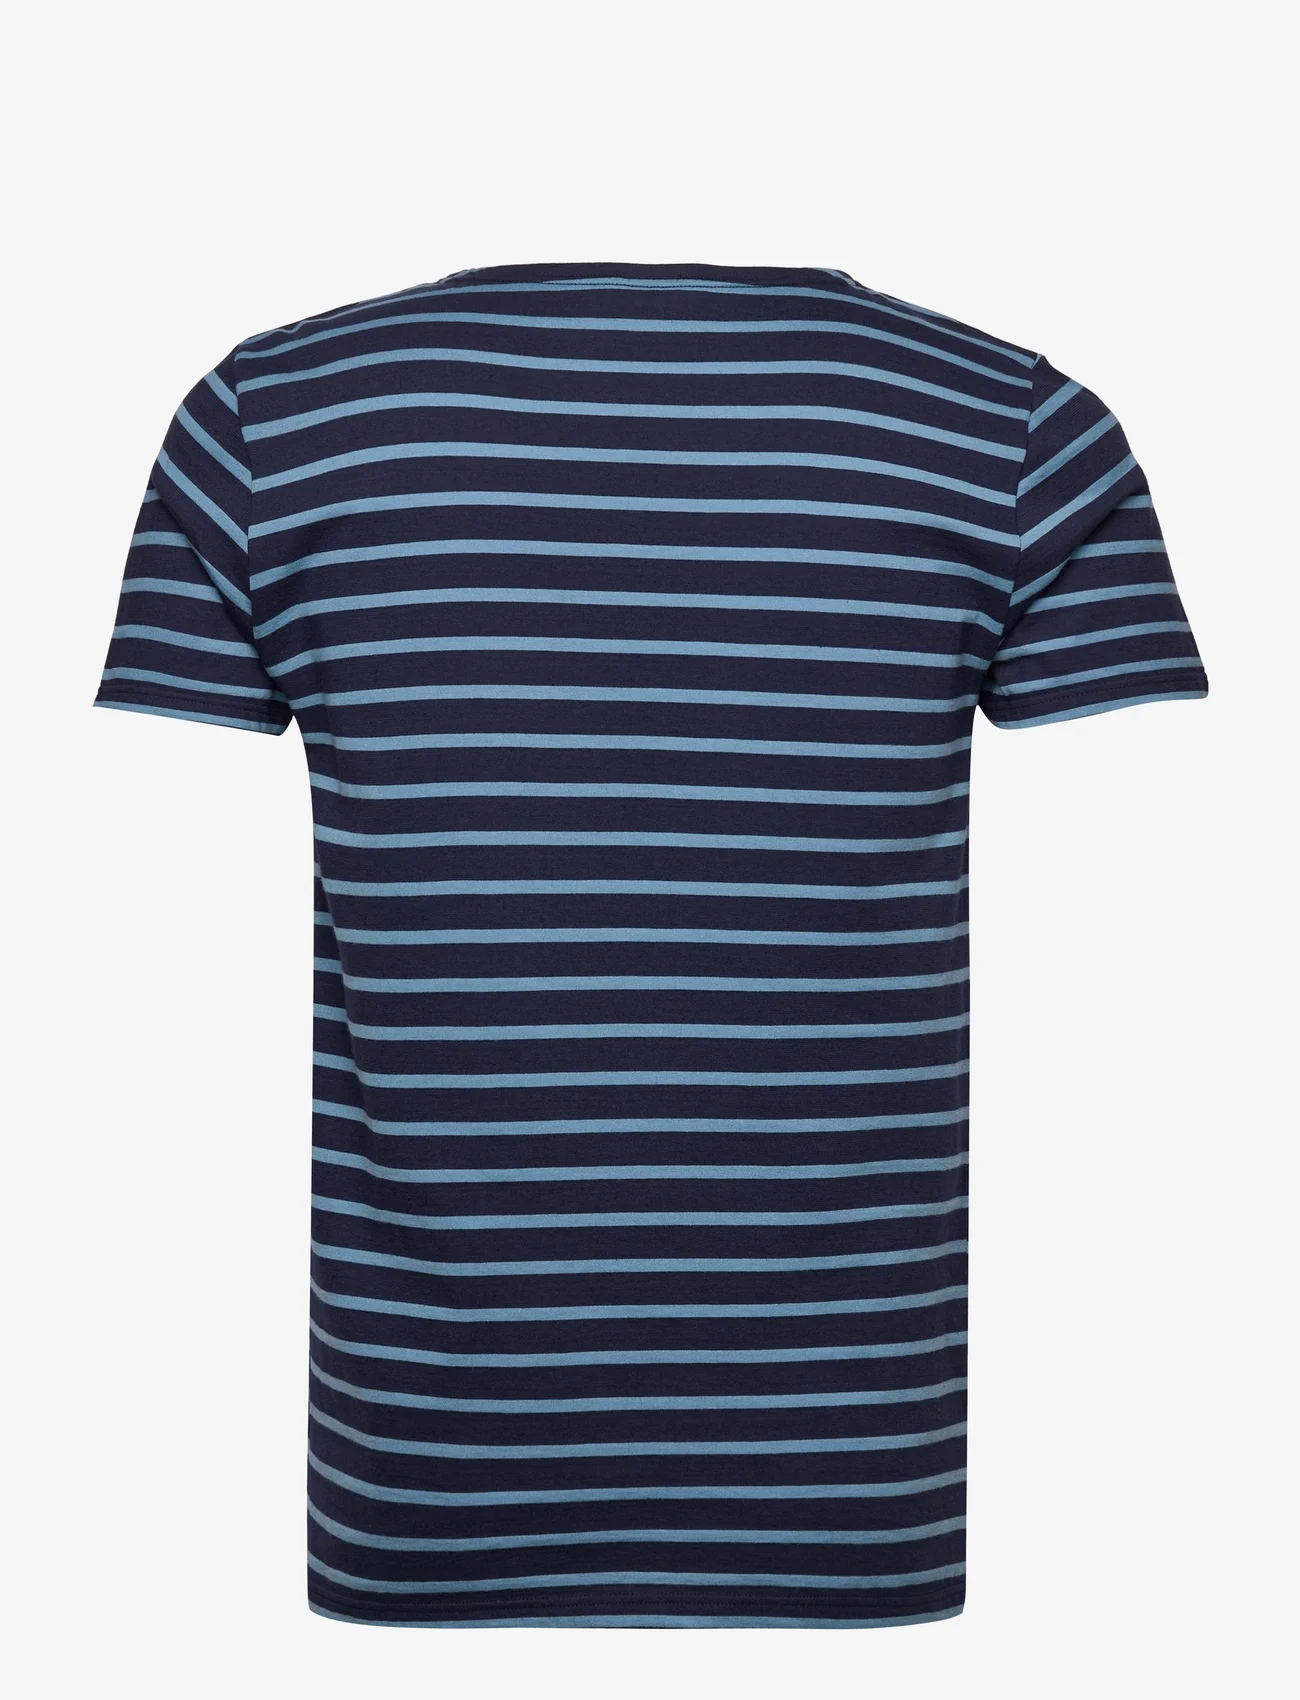 Armor Lux - Breton Striped Shirt Héritage - kortermede t-skjorter - marine deep/st lÔ - 1